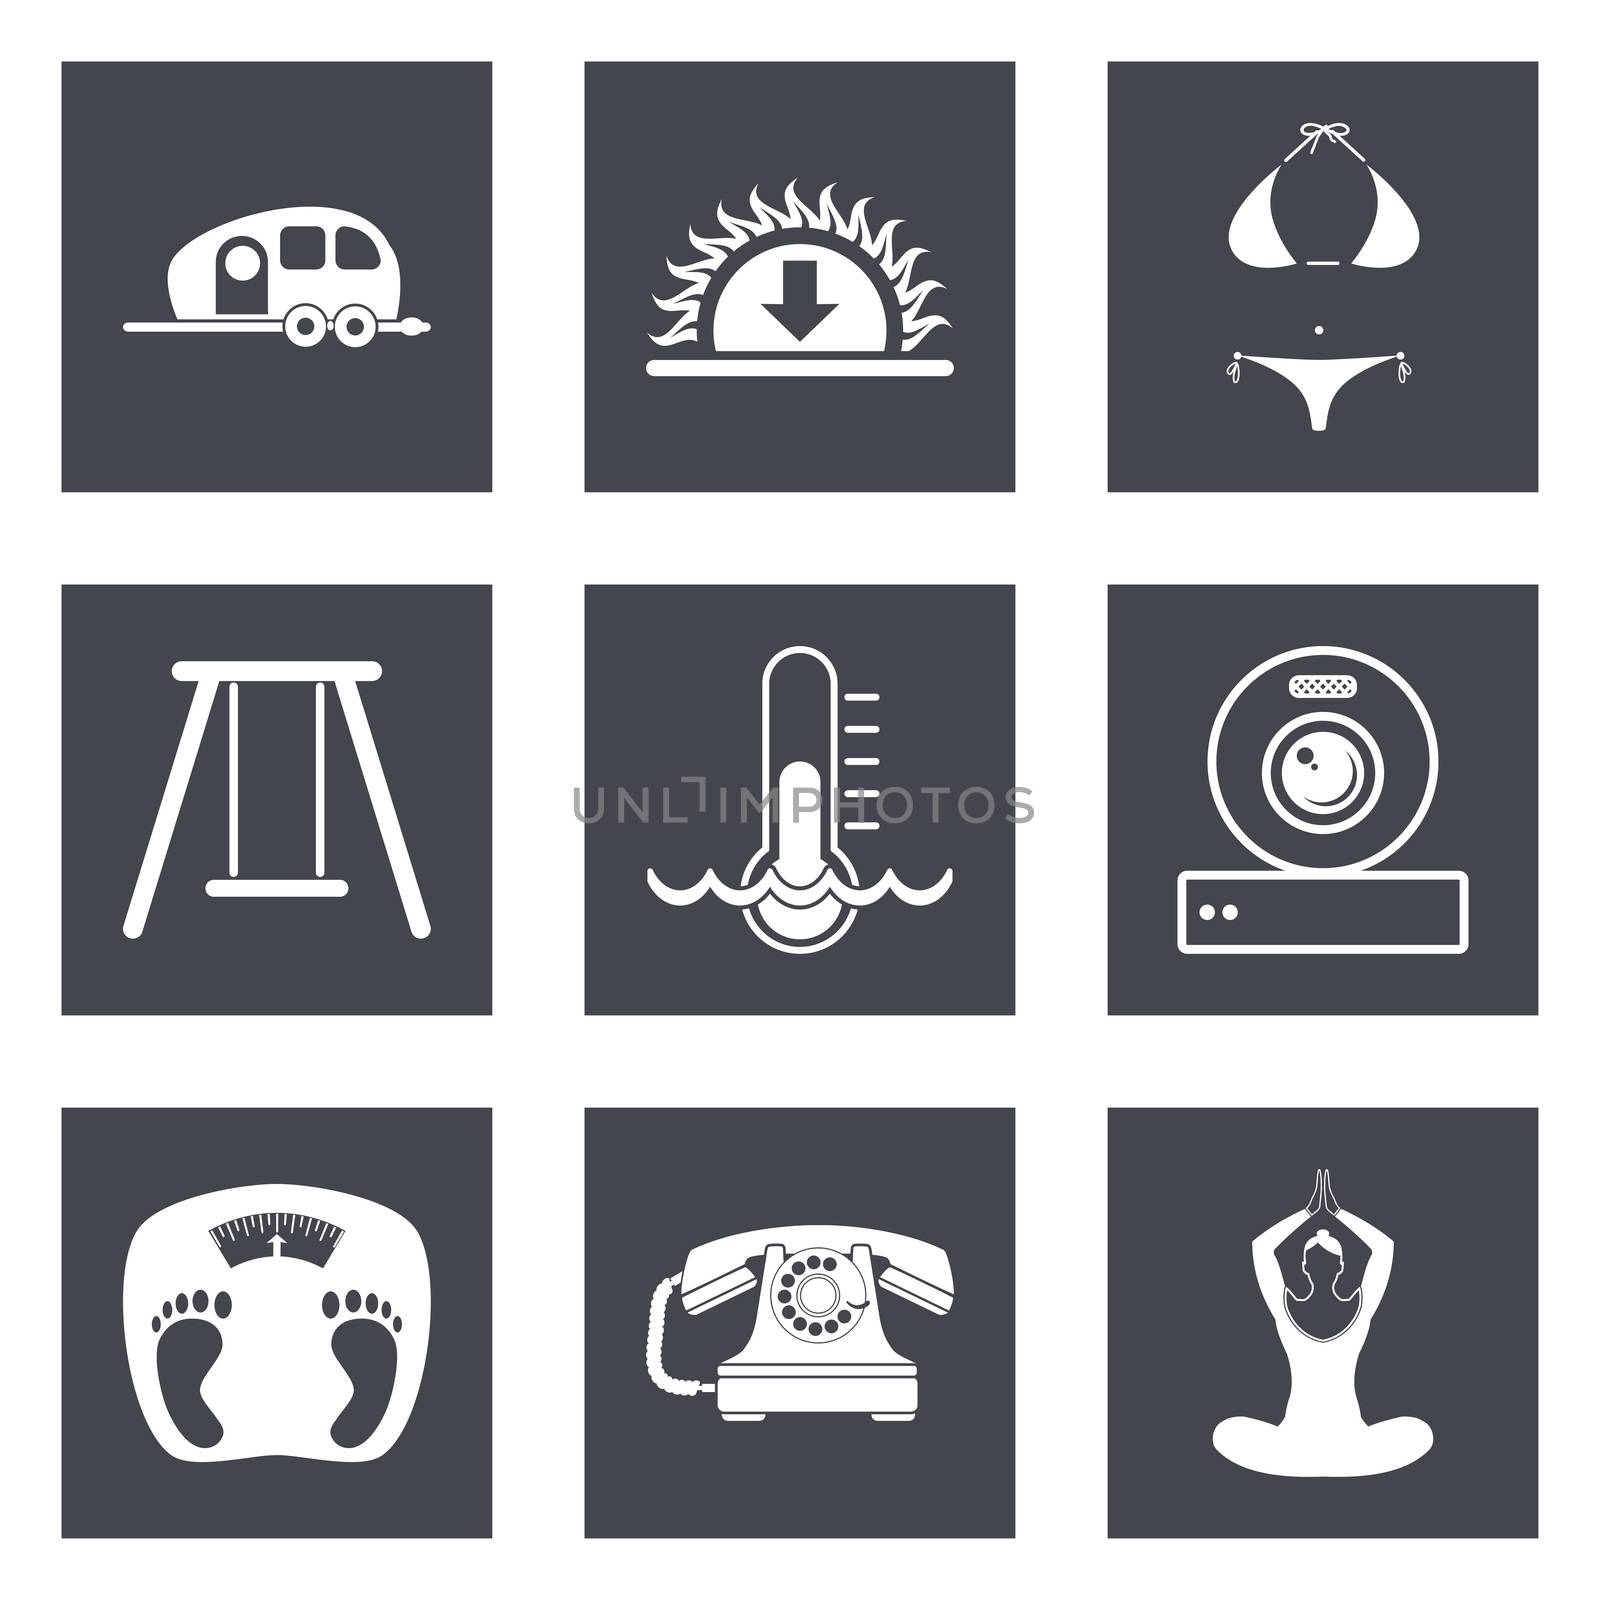 Icons for Web Design set 10 by smoki